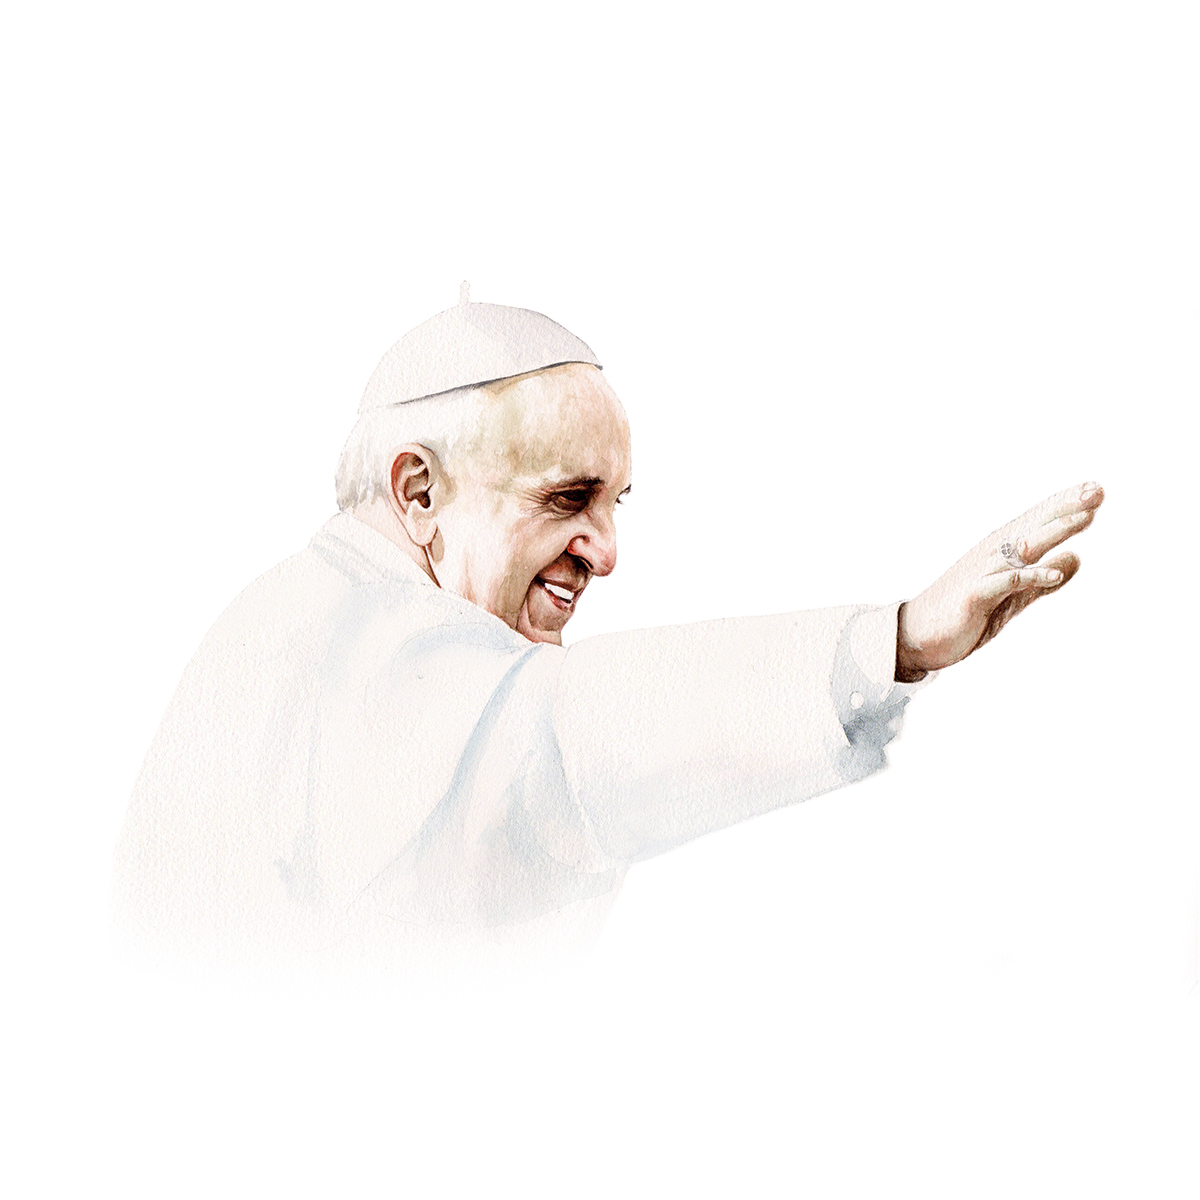 Illustratiorns Pope Francis I watercolour portrait